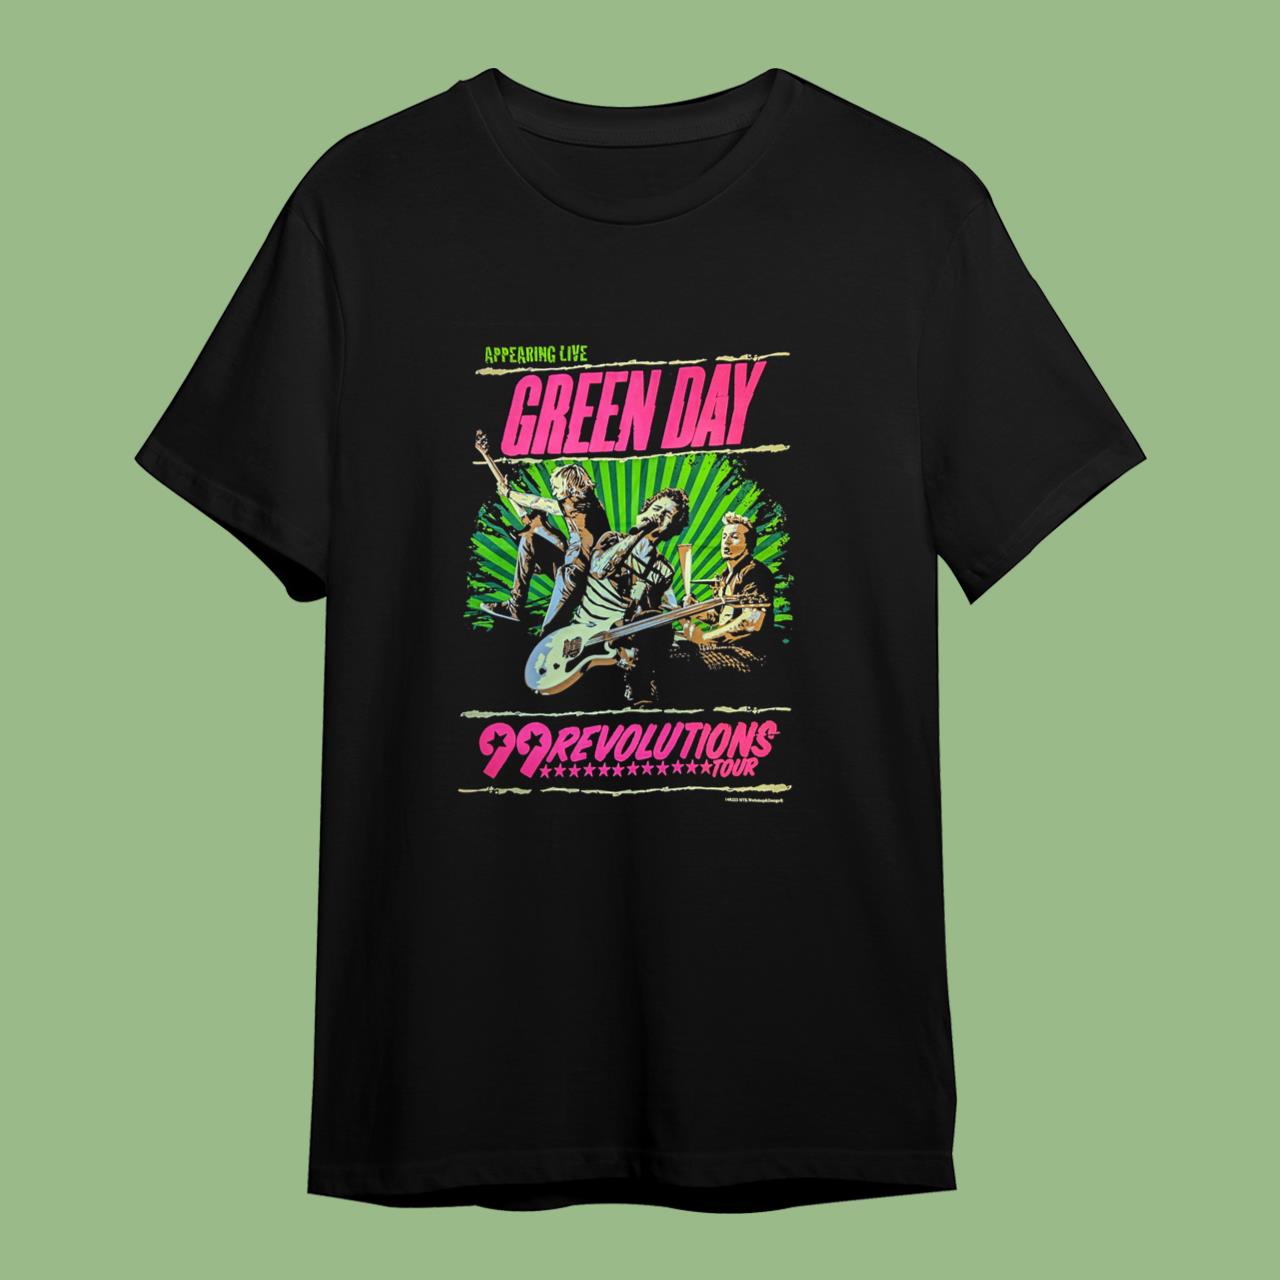 Green Day 99 Revolutions Tour Original New Type System T-Shirt